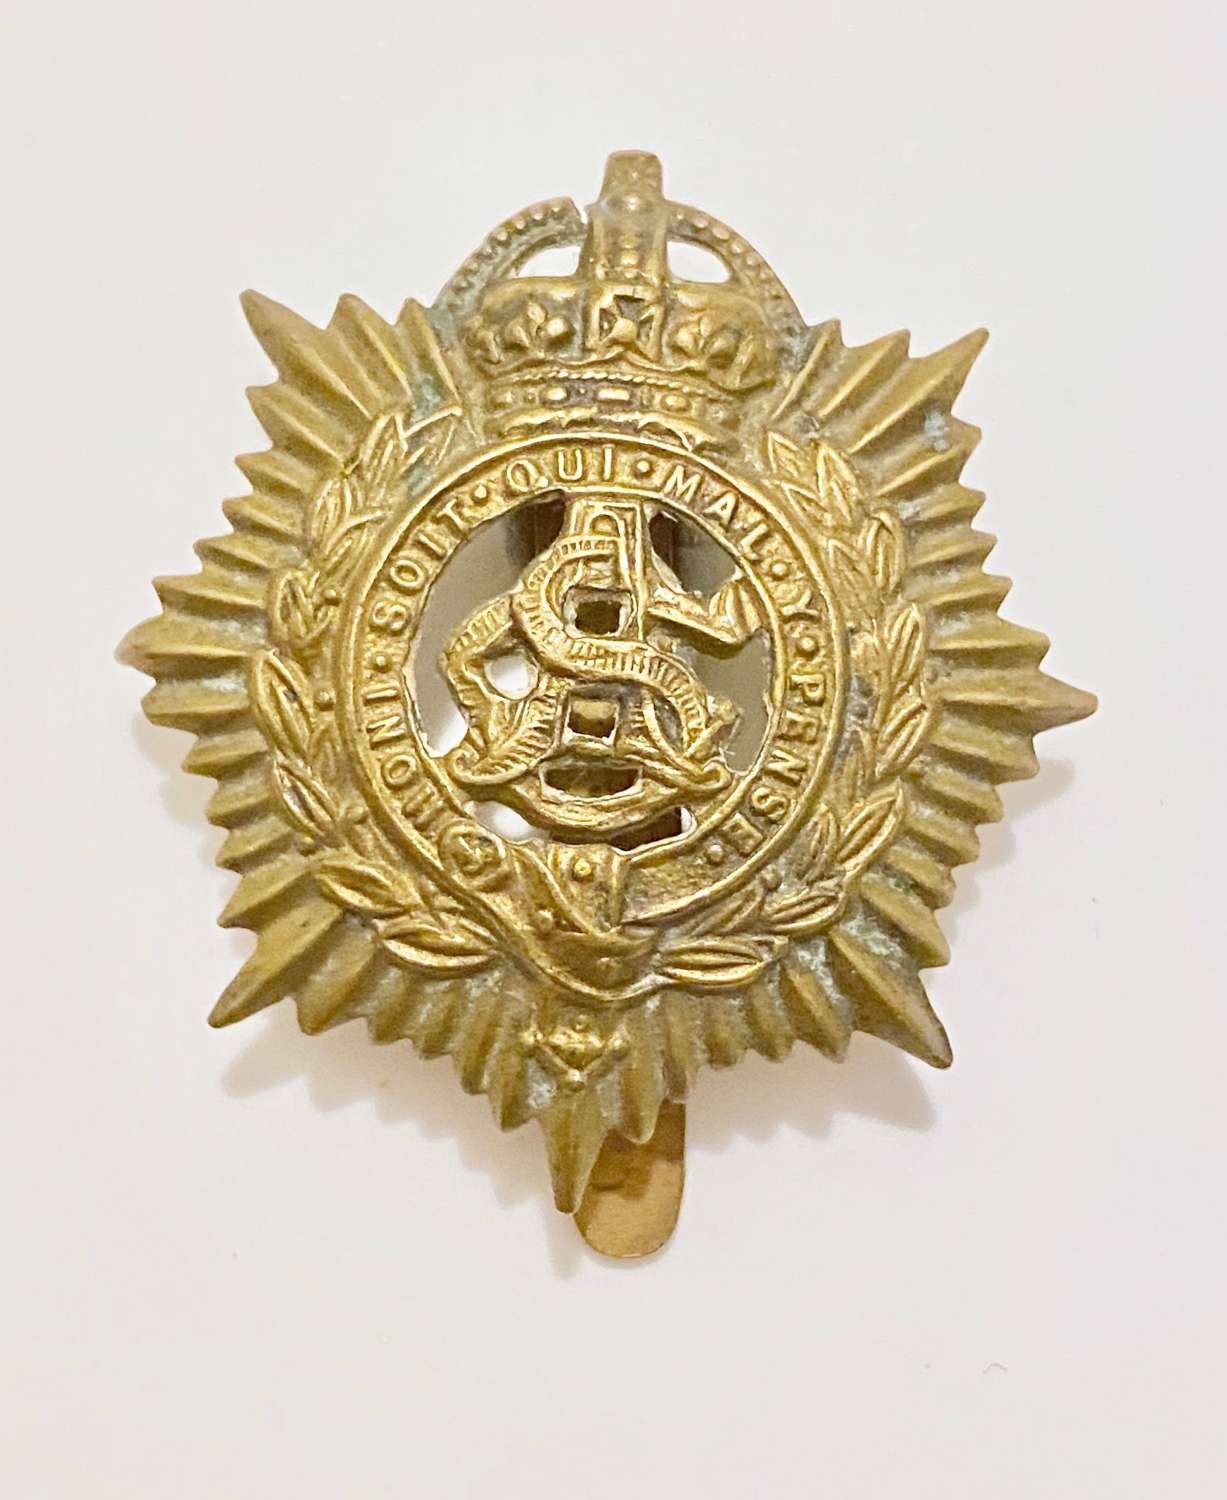 WW1 Army Service Corps Cap Badge by Woodward Birmingham.